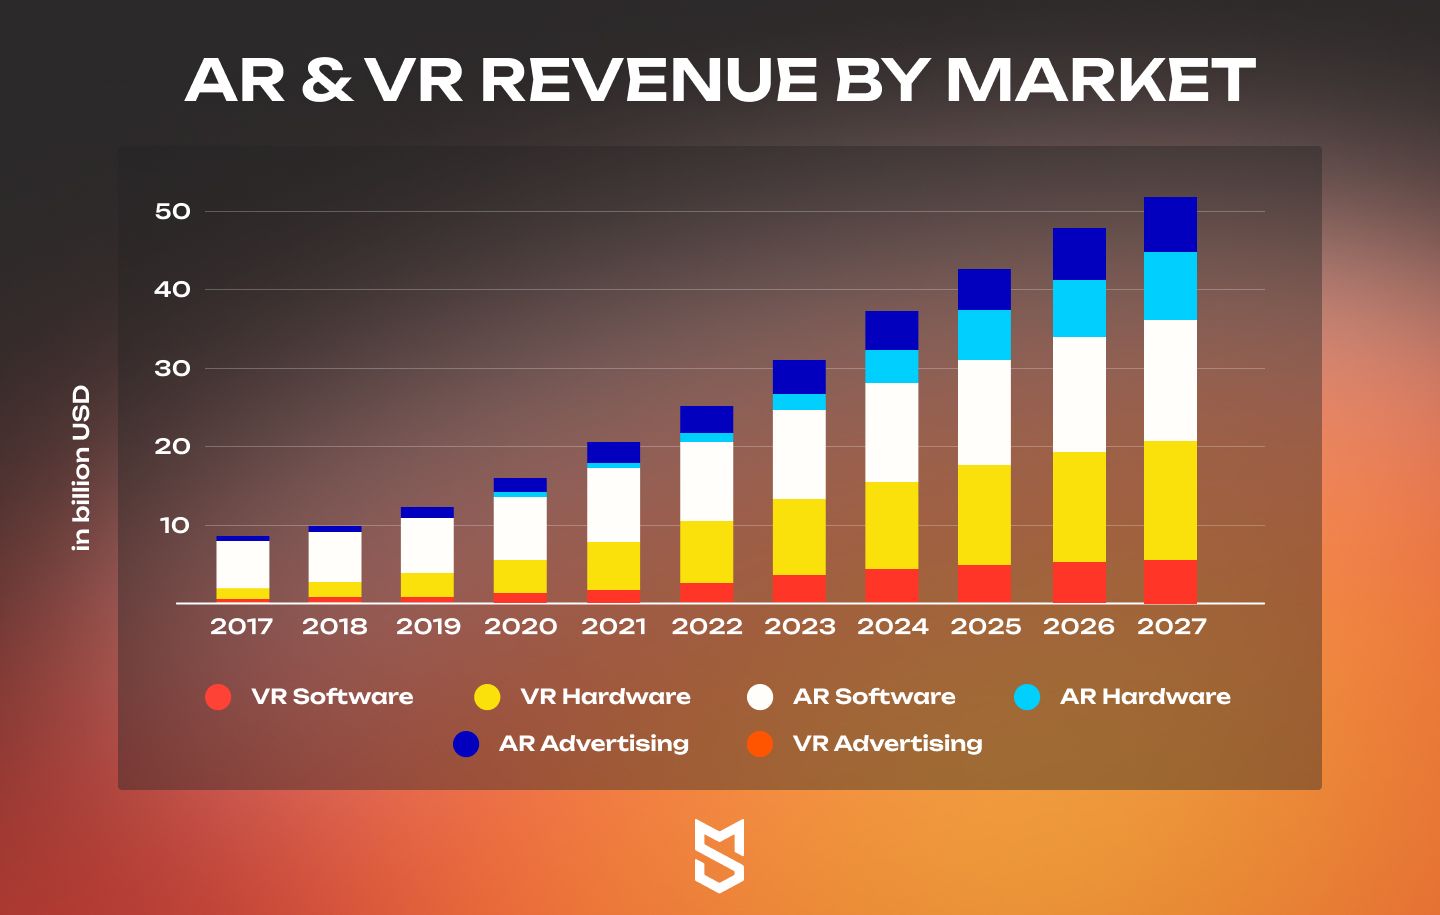 AR & VR technologies' revenue by market